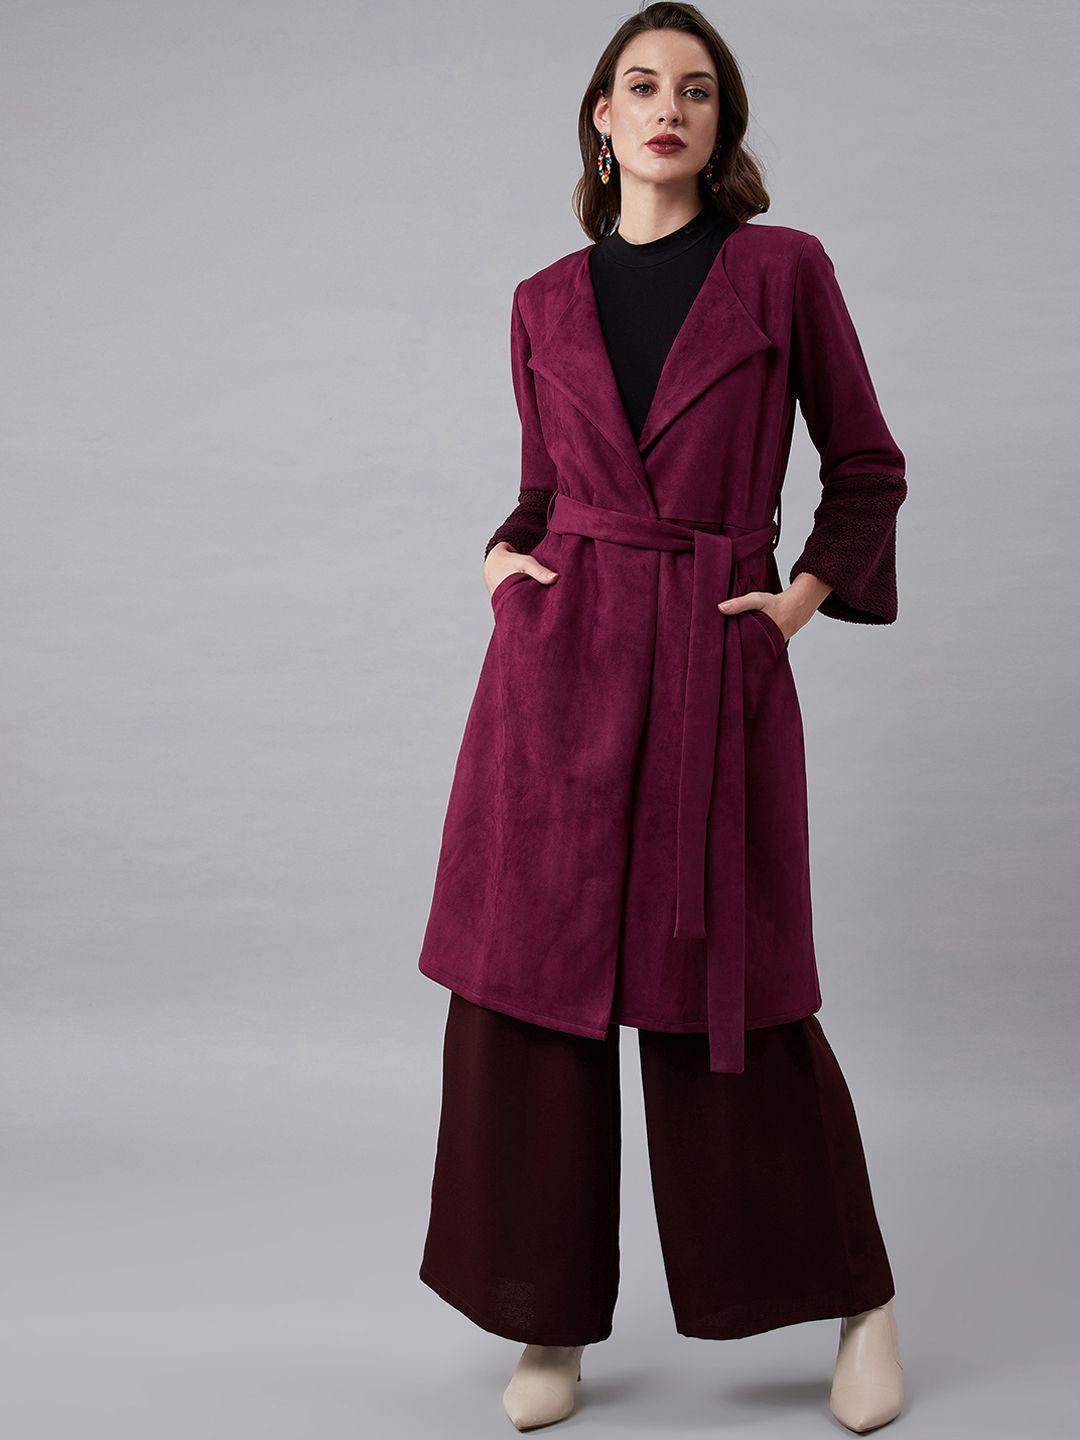 athena women magenta solid suede knee-length faux fur trim wrap coat